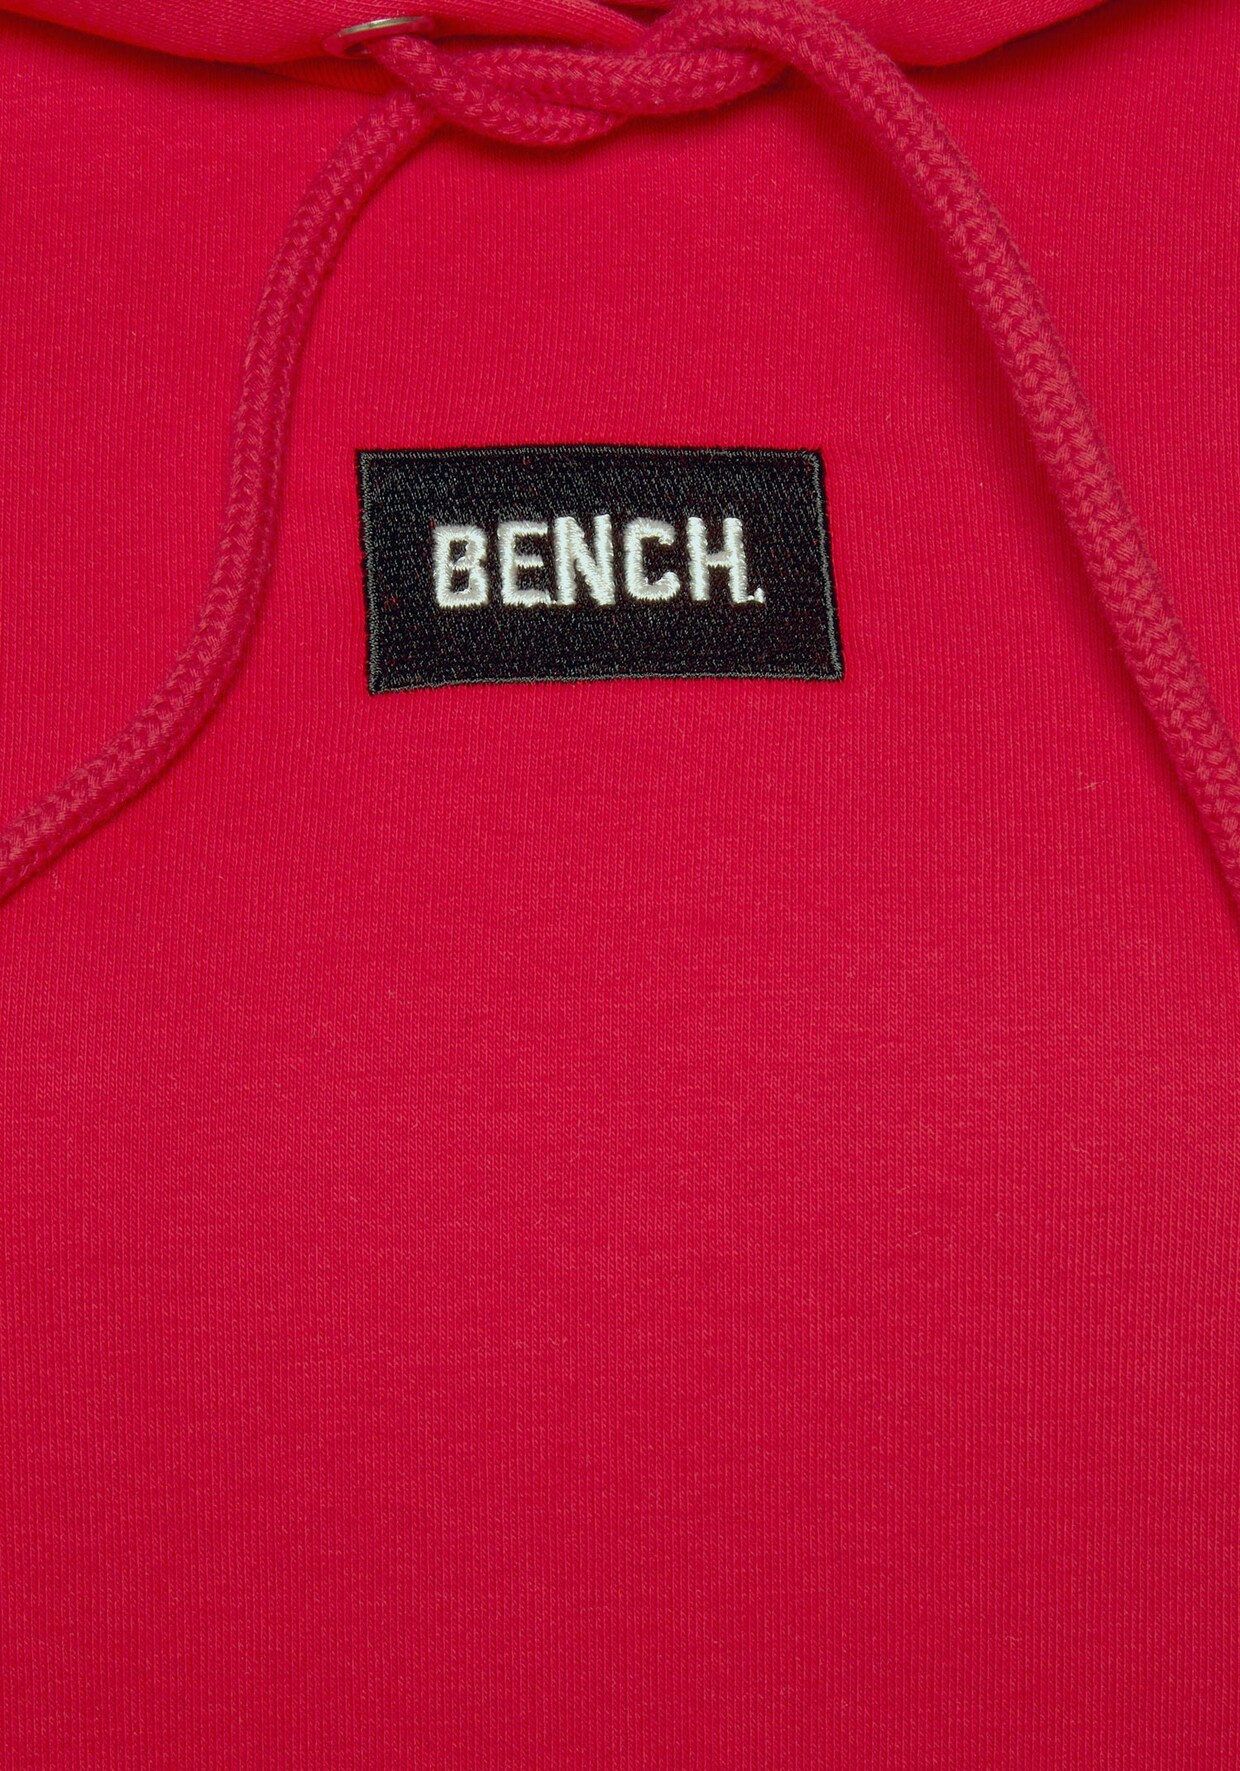 Bench. Sweatkleid - rot